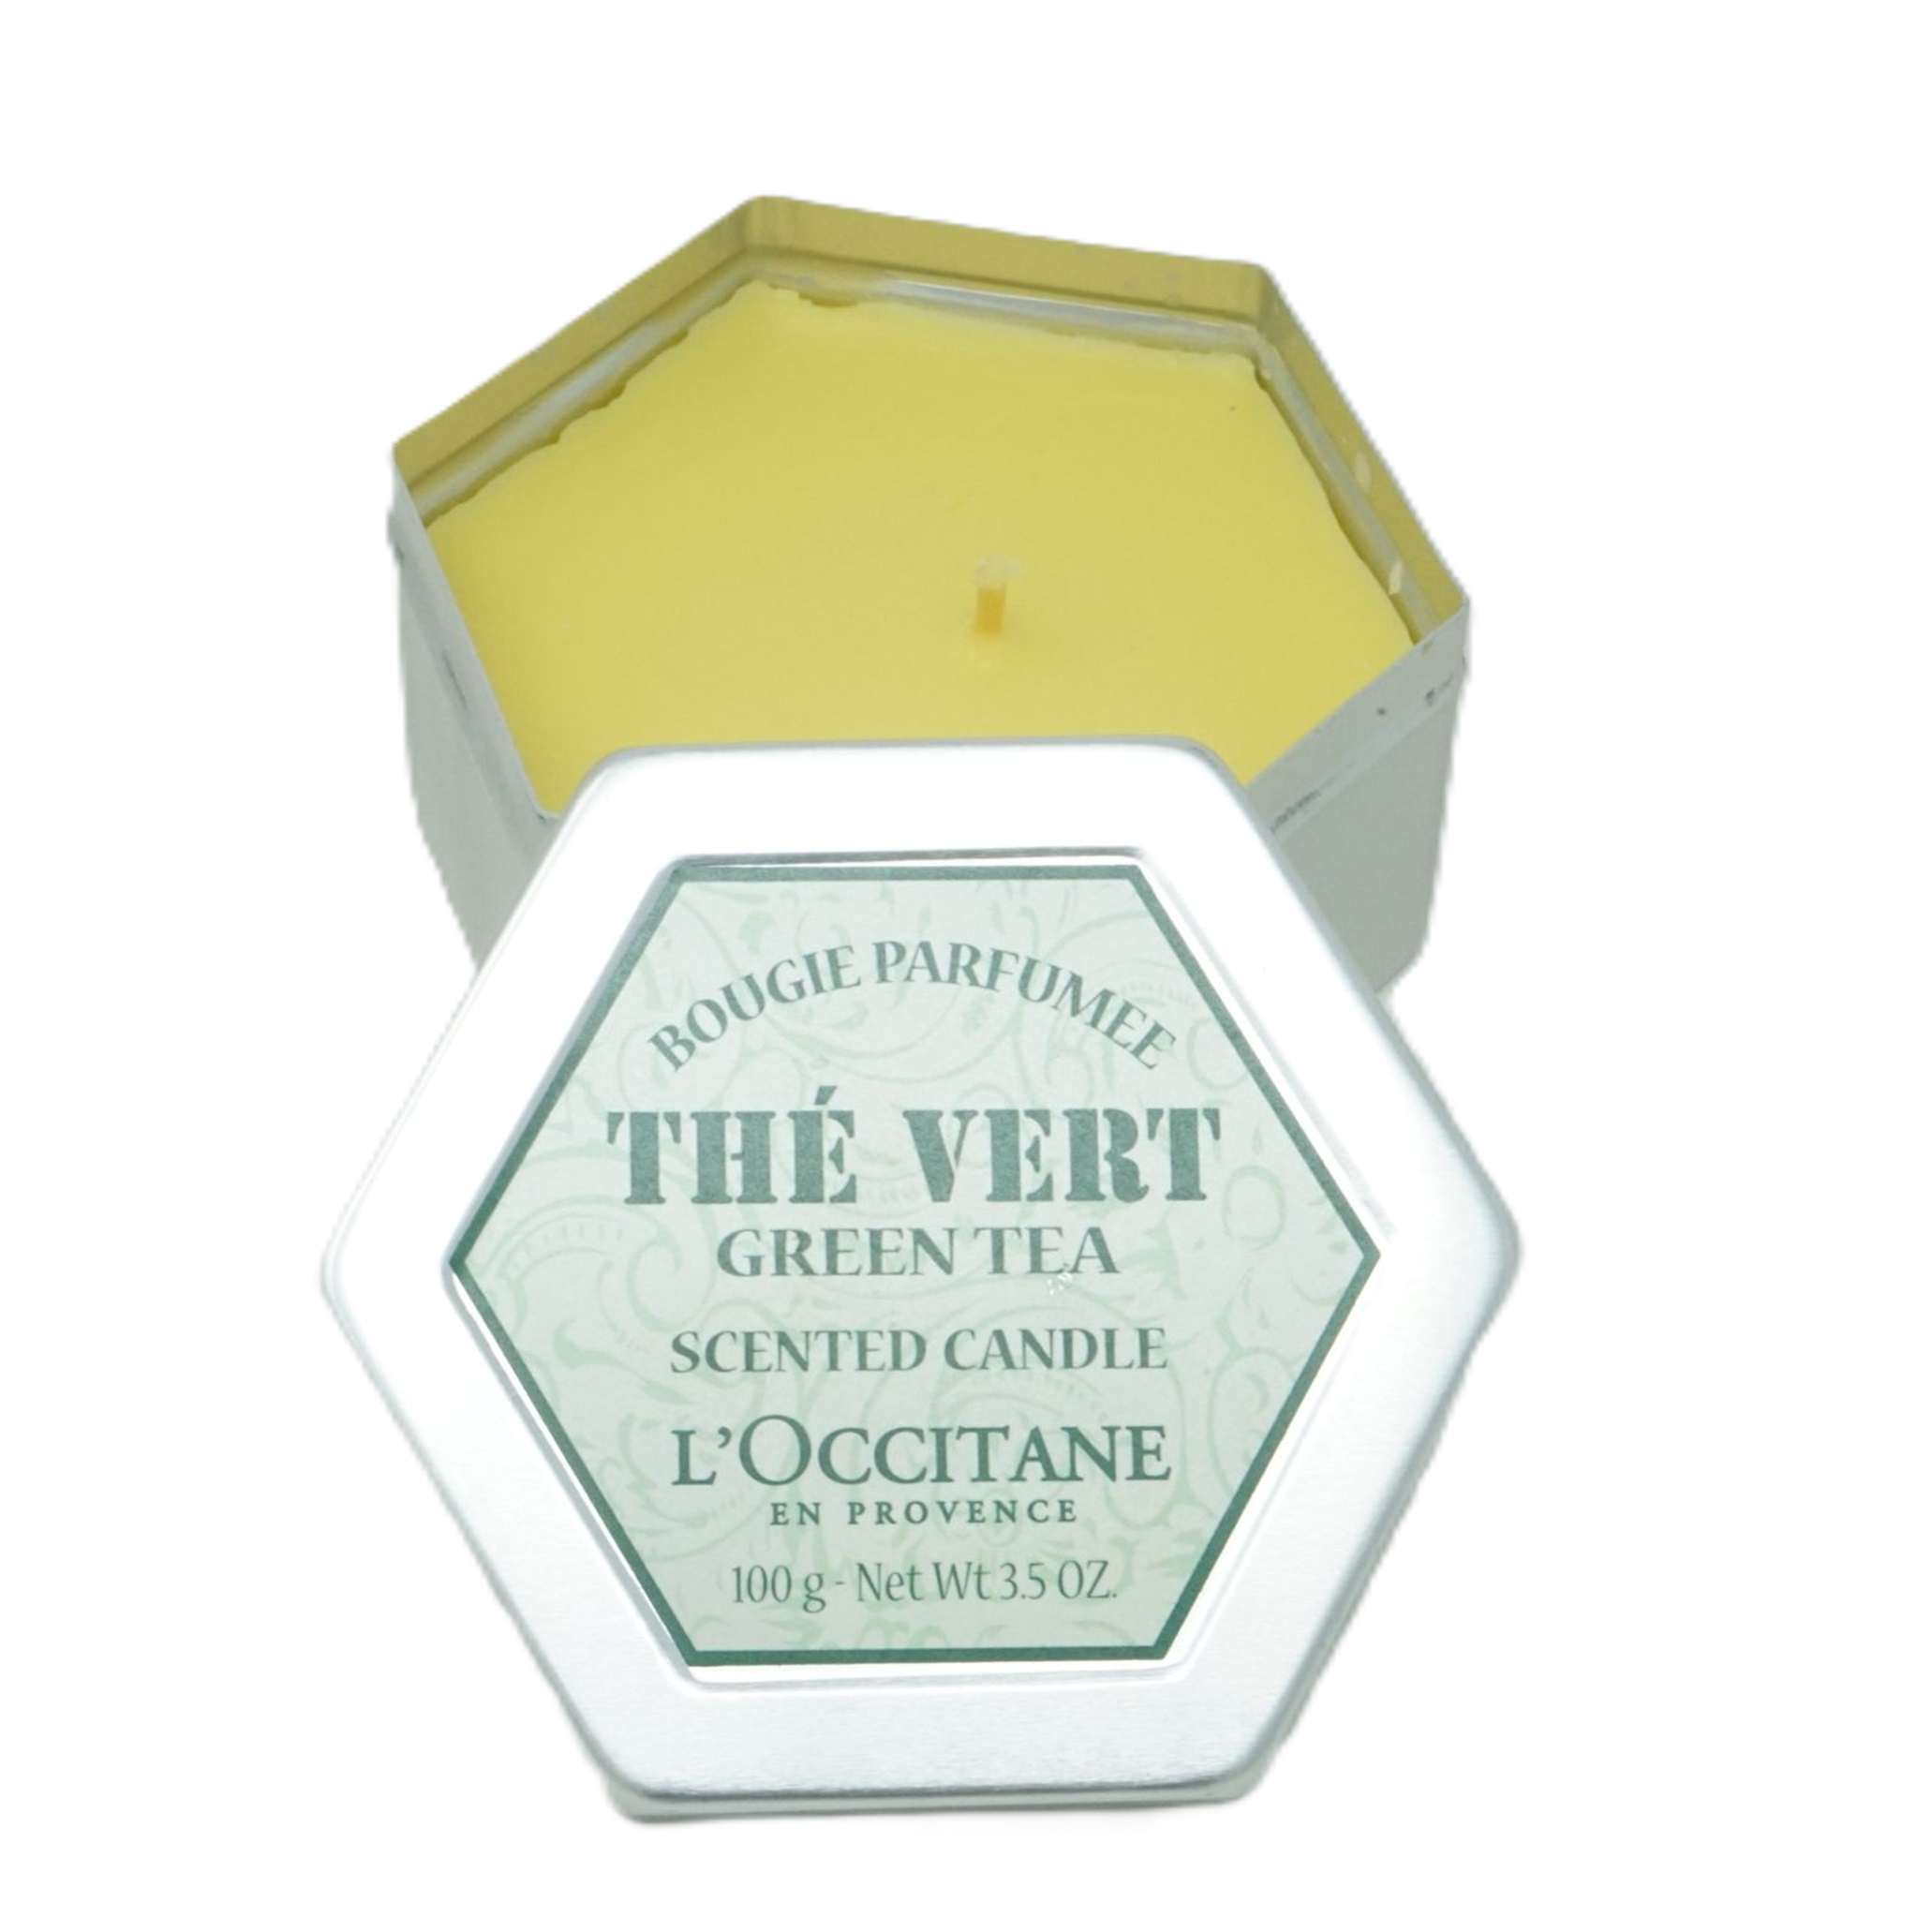 Loccitane The Vert Green Tea Scented Candle Kerze 100g